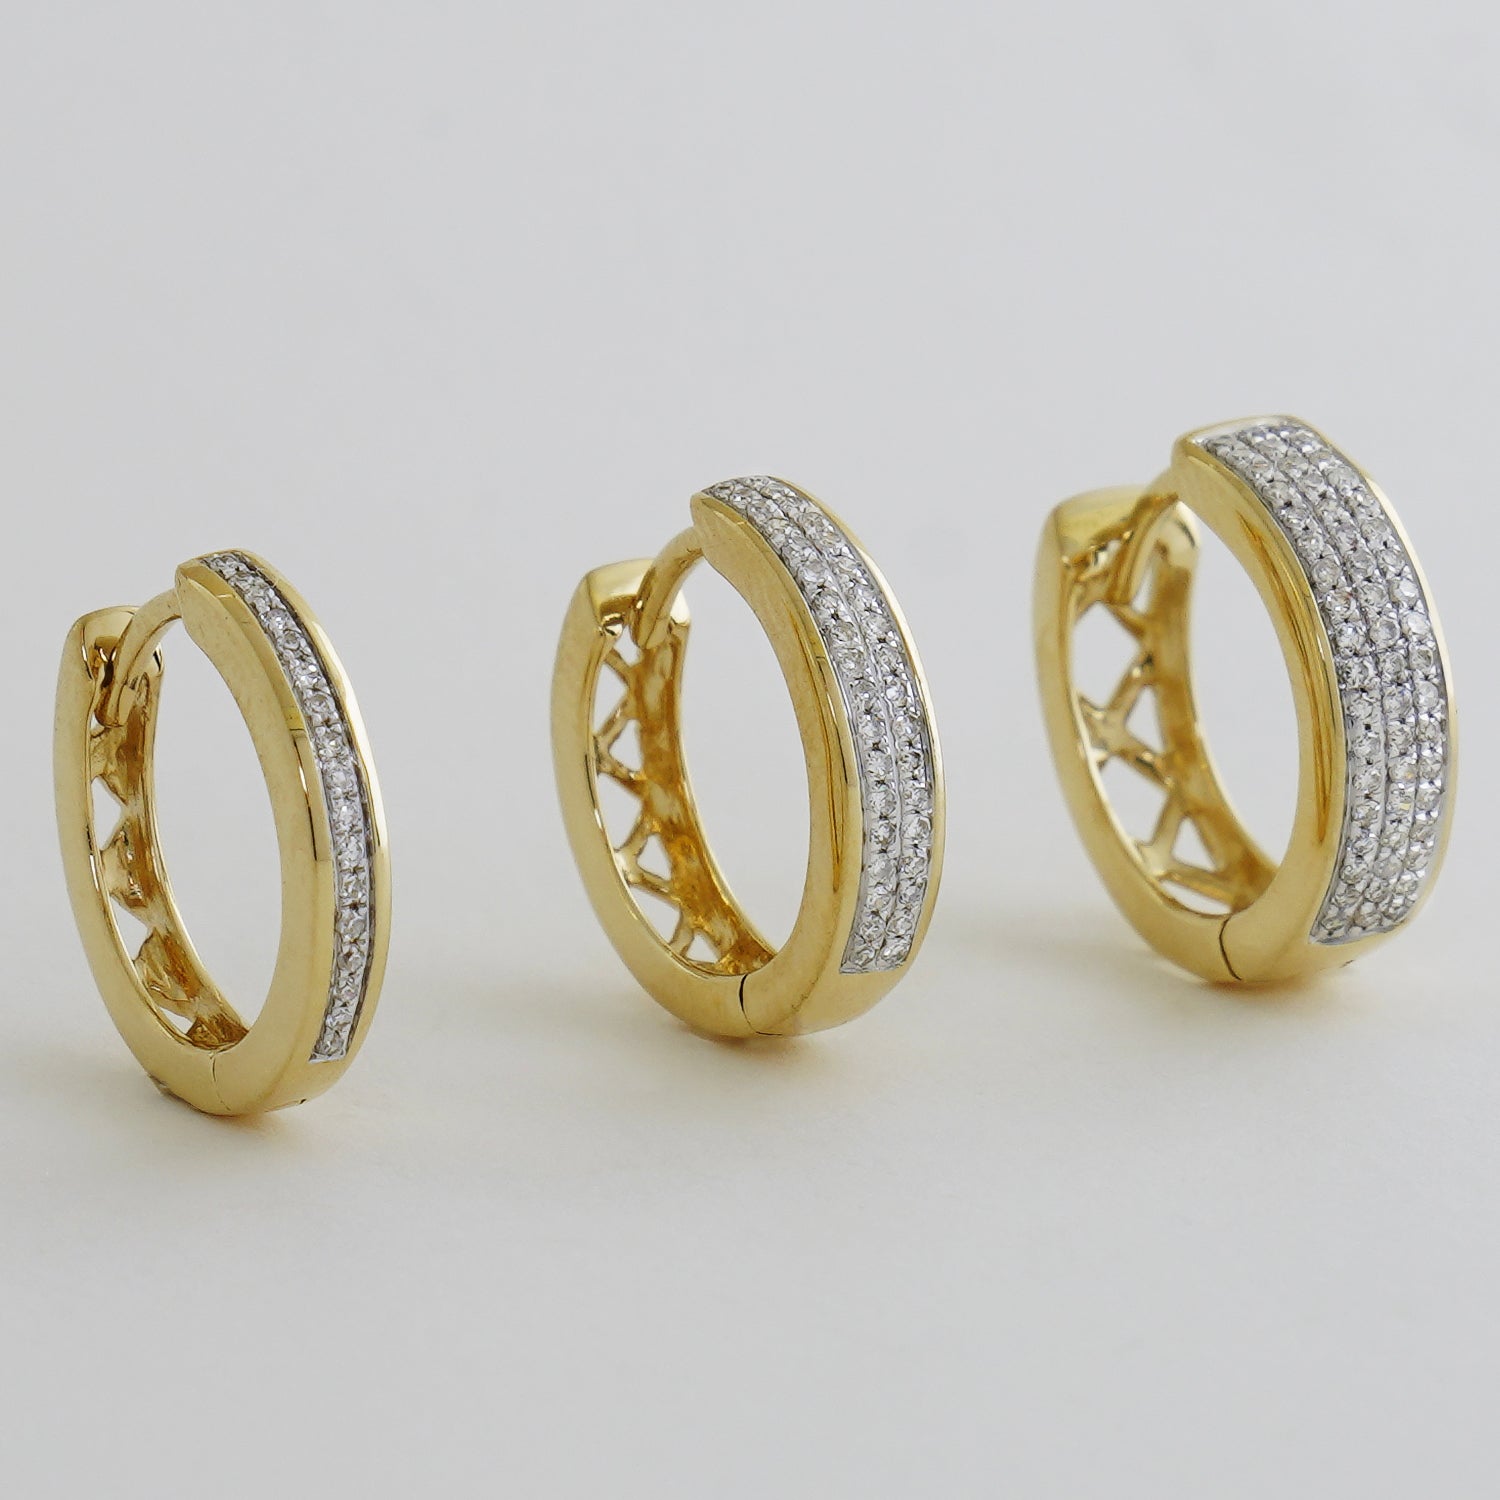 14K Solid Gold Diamond Hoop Earrings - anygolds